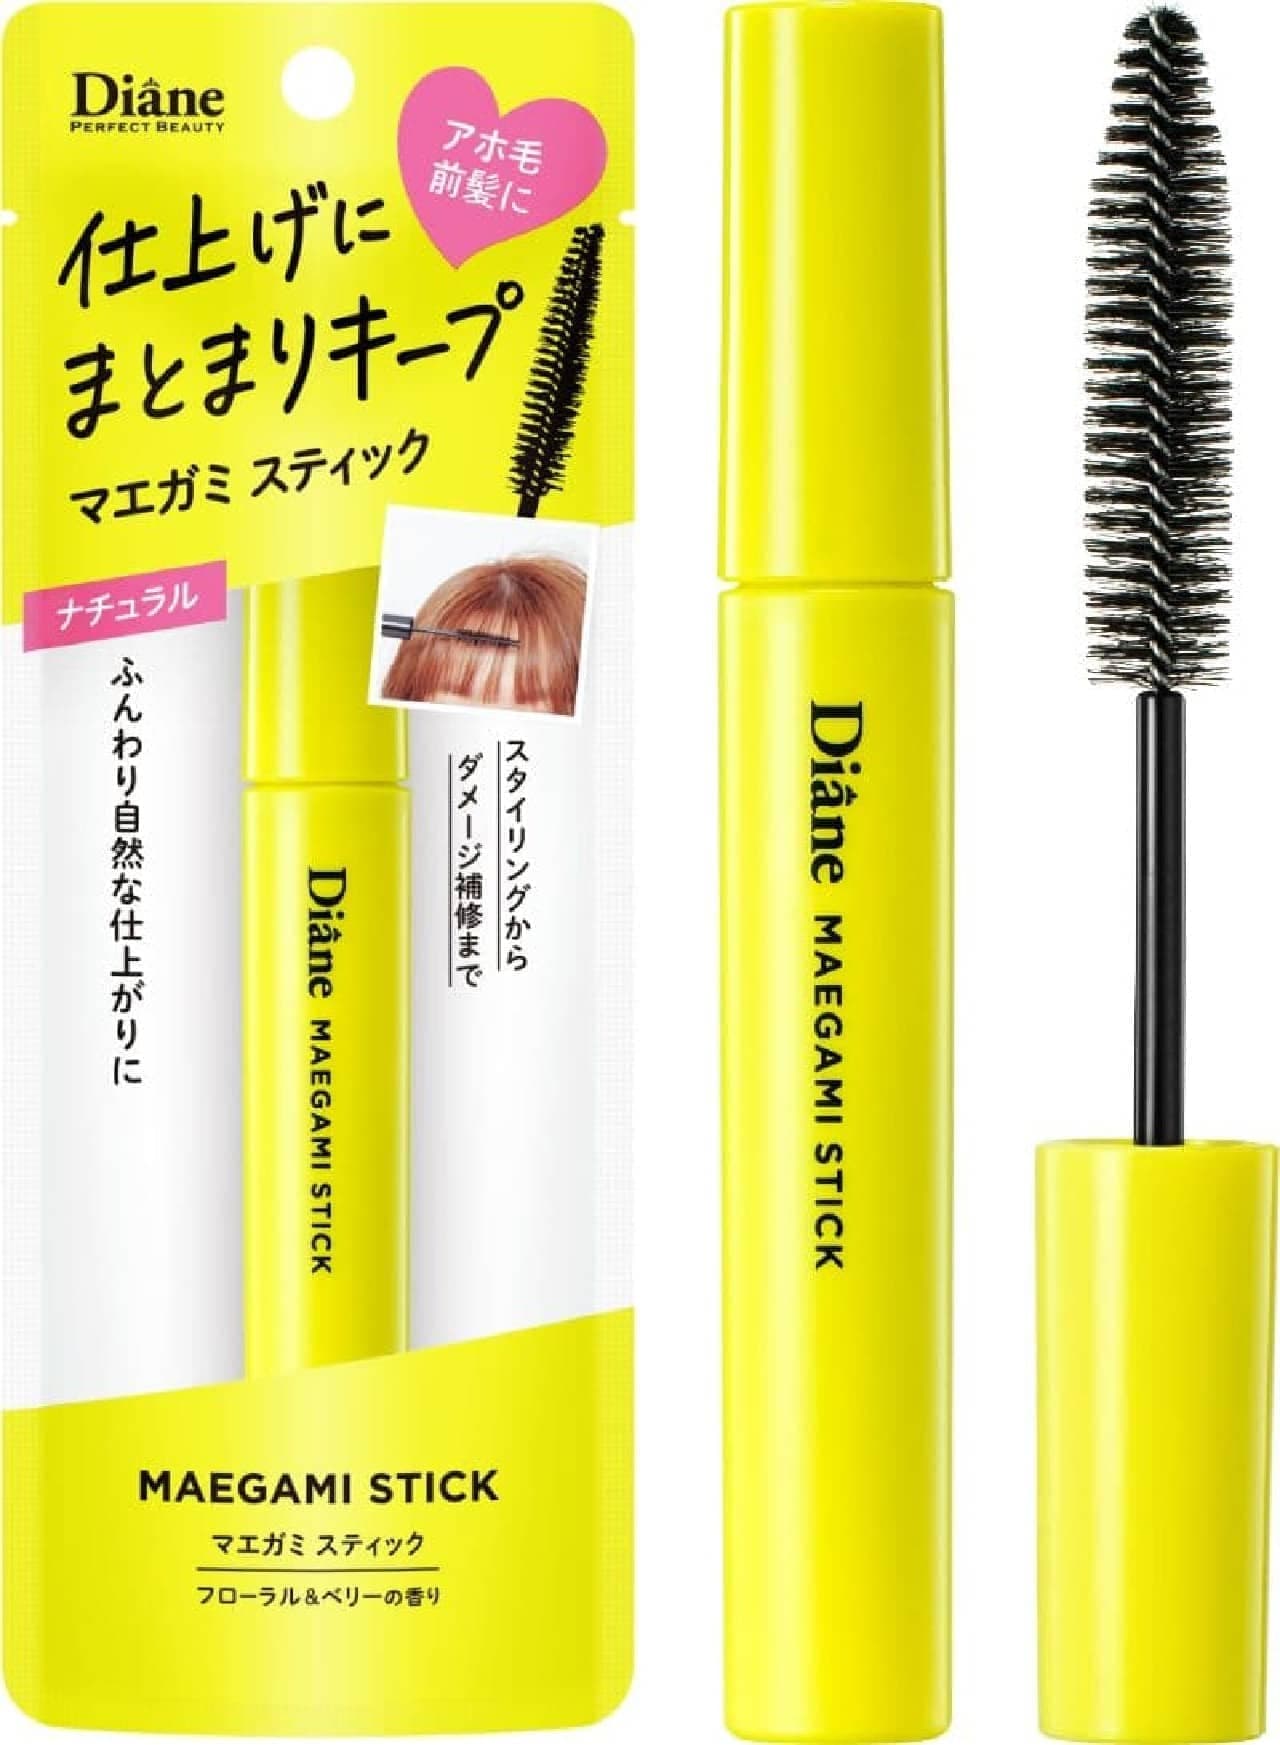 Diane Perfect Beauty "Maegami Stick Natural